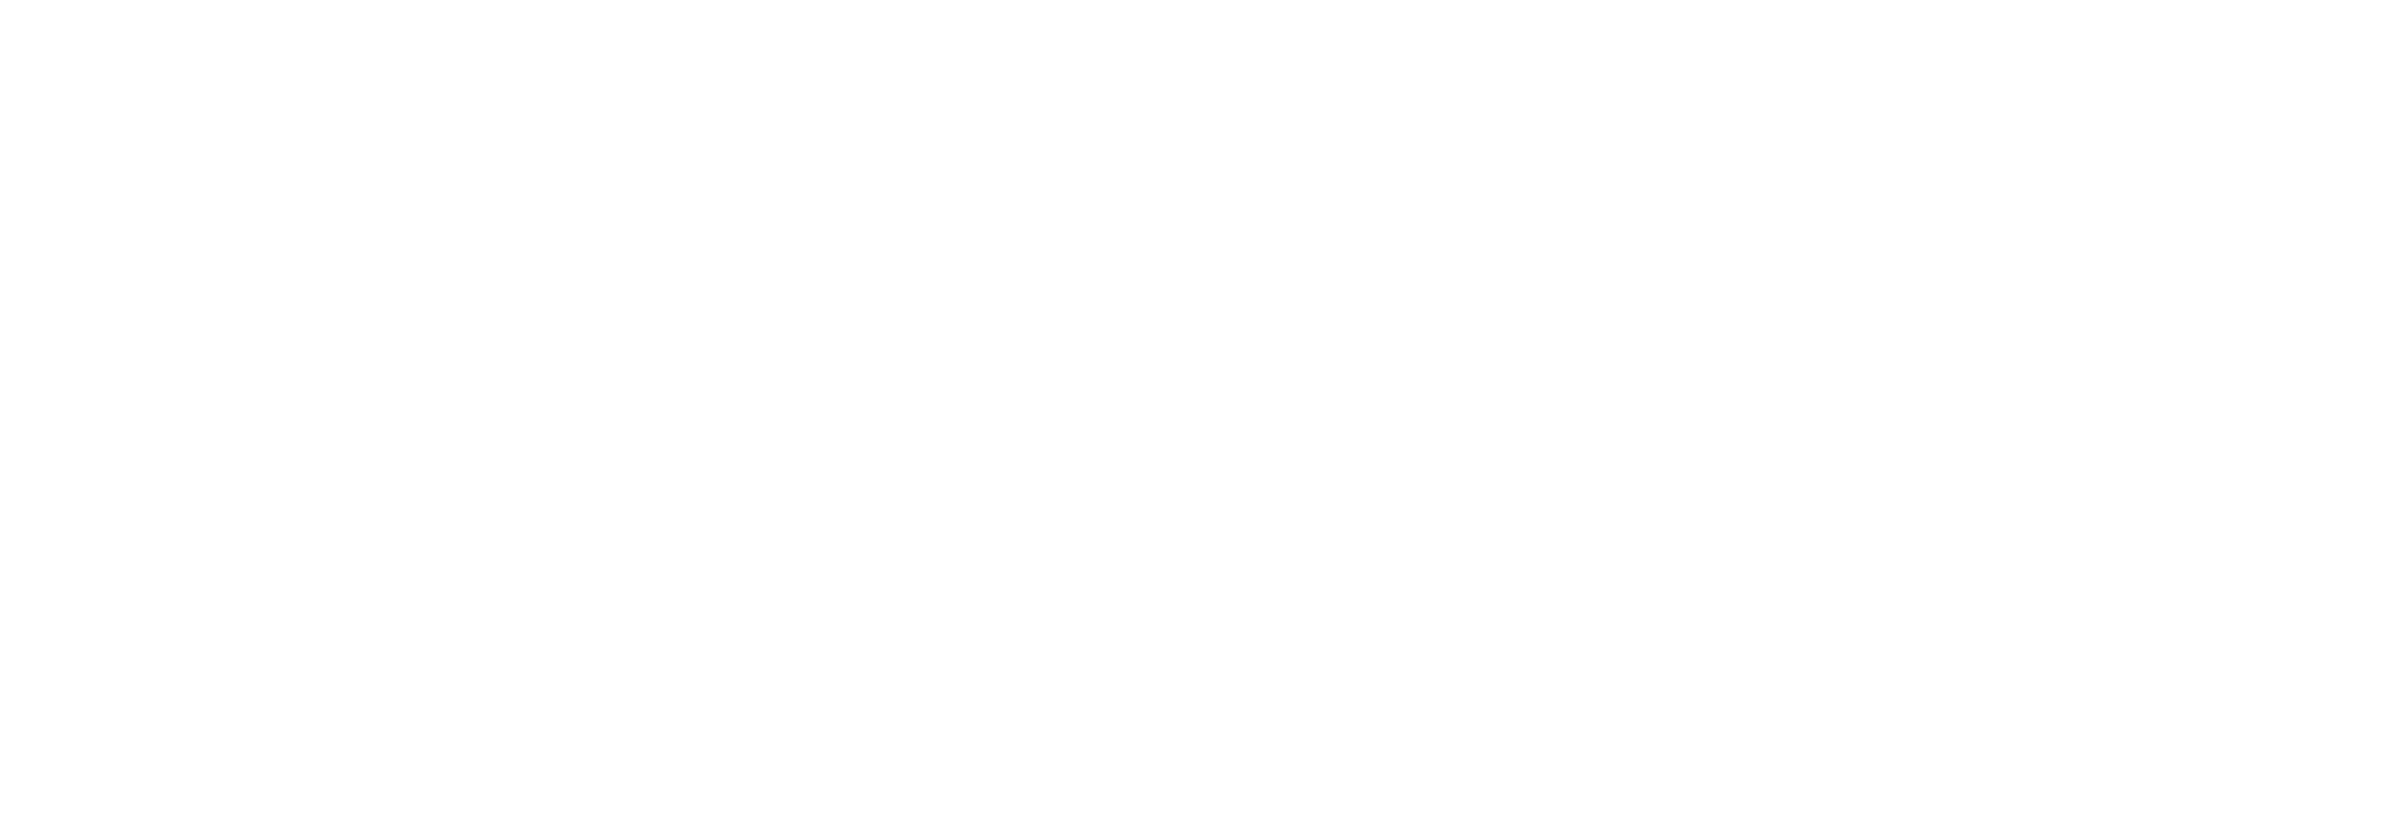 Gather : A Supper Club